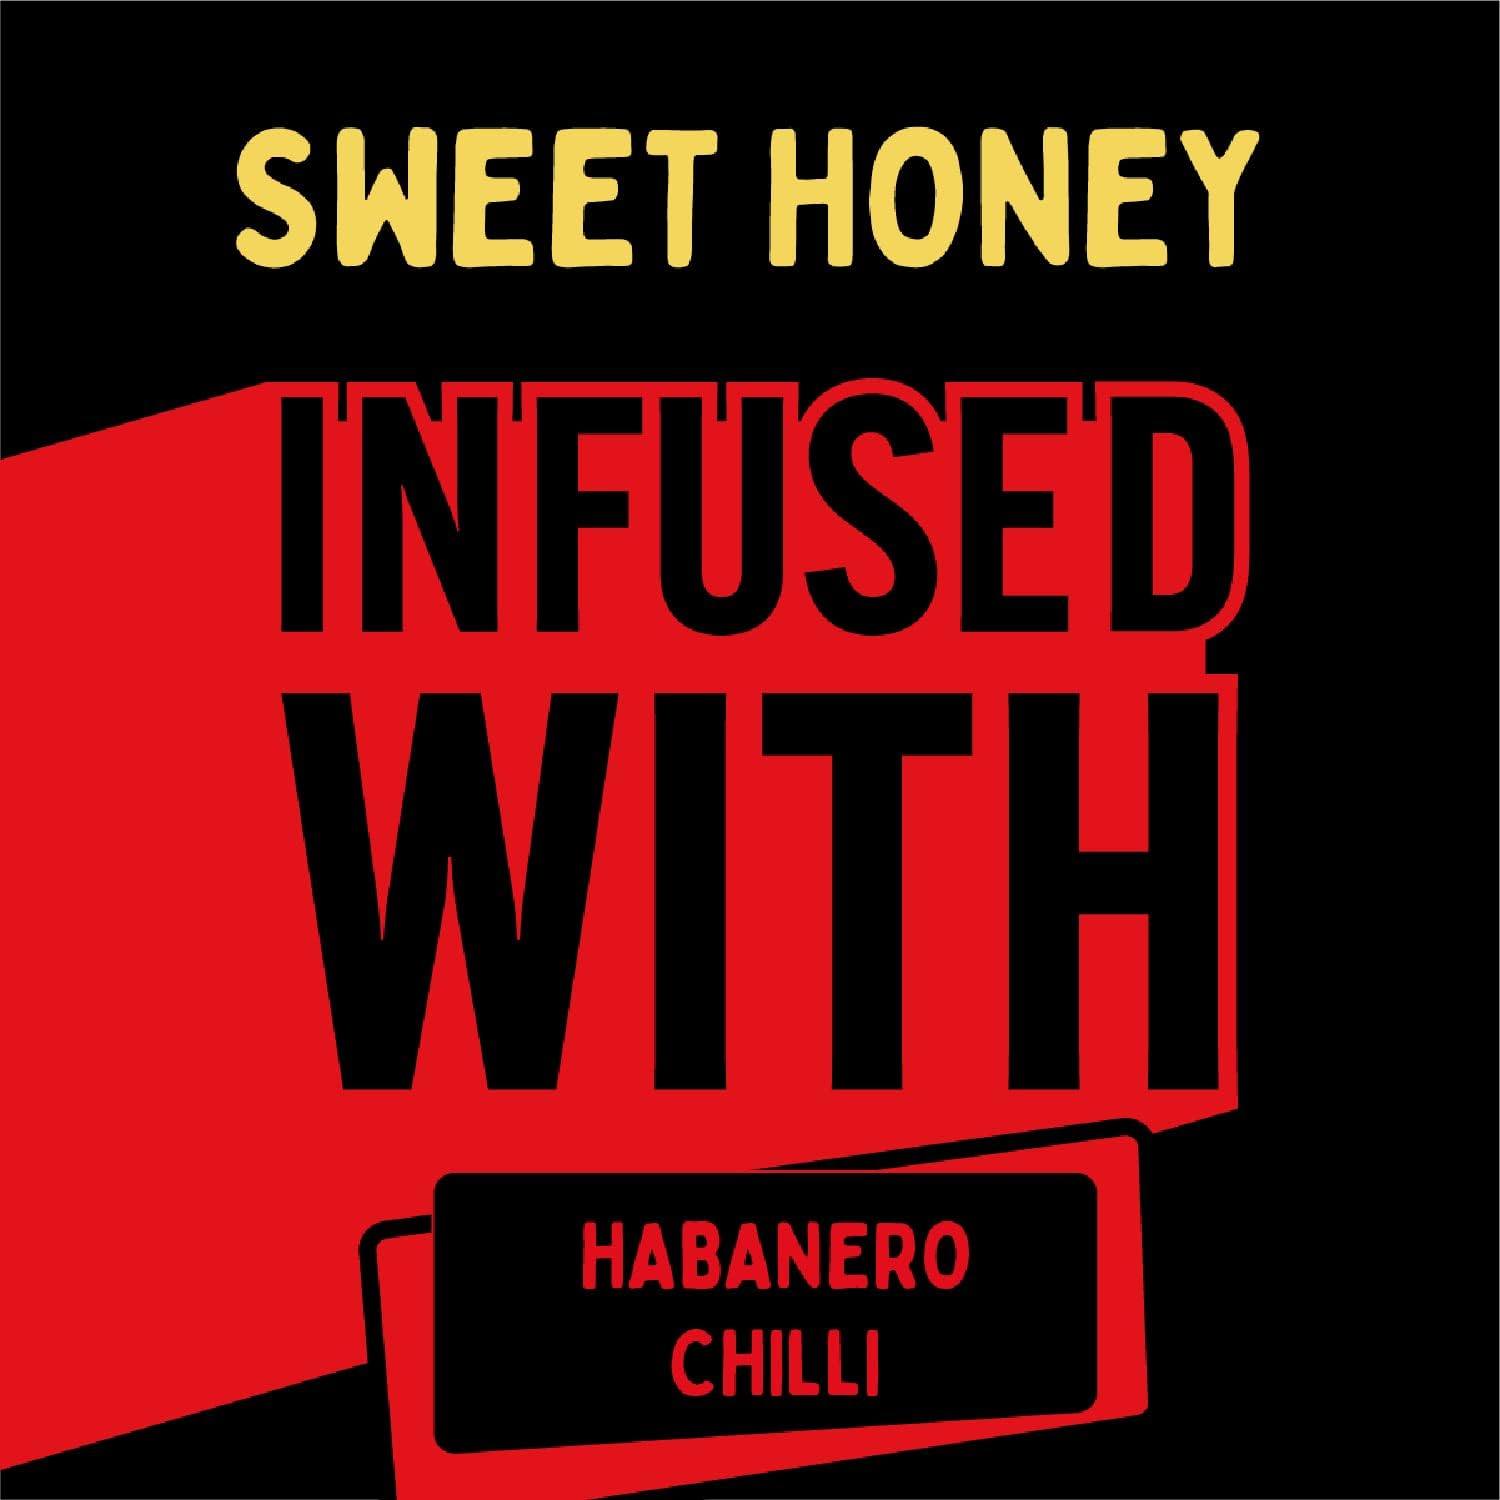 Xxtra Hot Honey | 350G | JD's Hot Honey | Habanero Infused - One Stop Chilli Shop